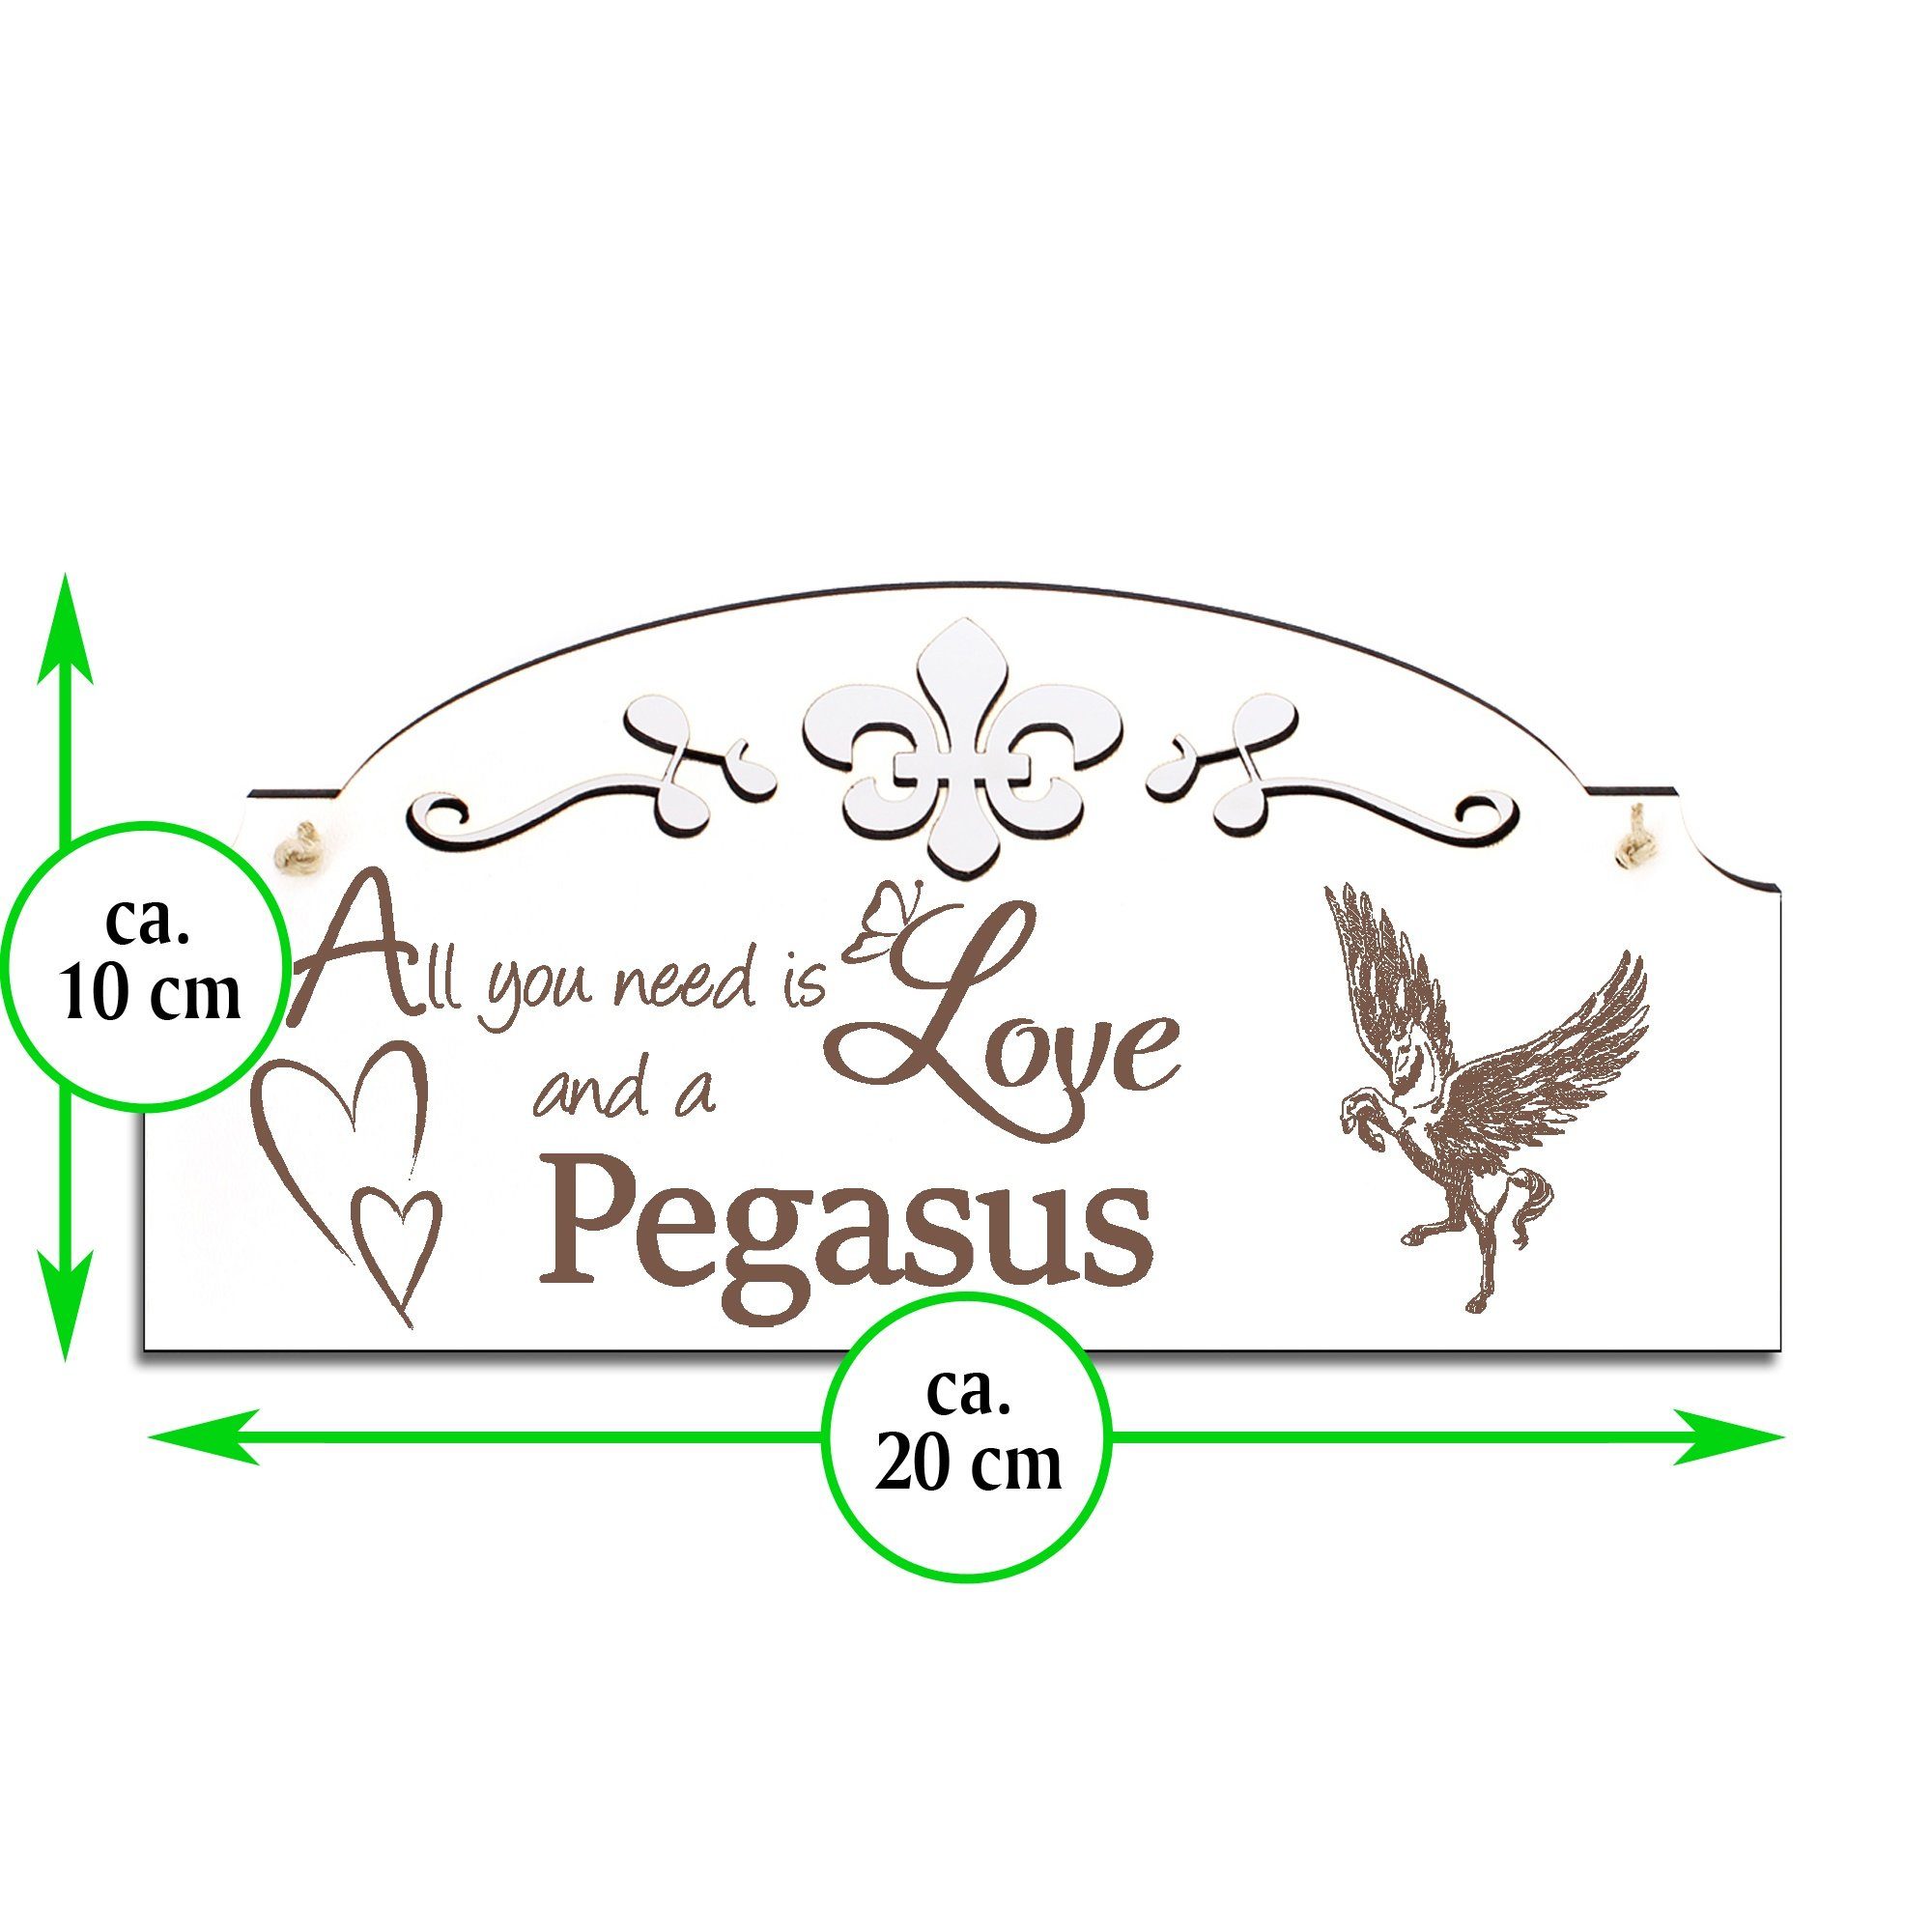 Pegasus Hängedekoration 20x10cm Deko Love is you need All Dekolando